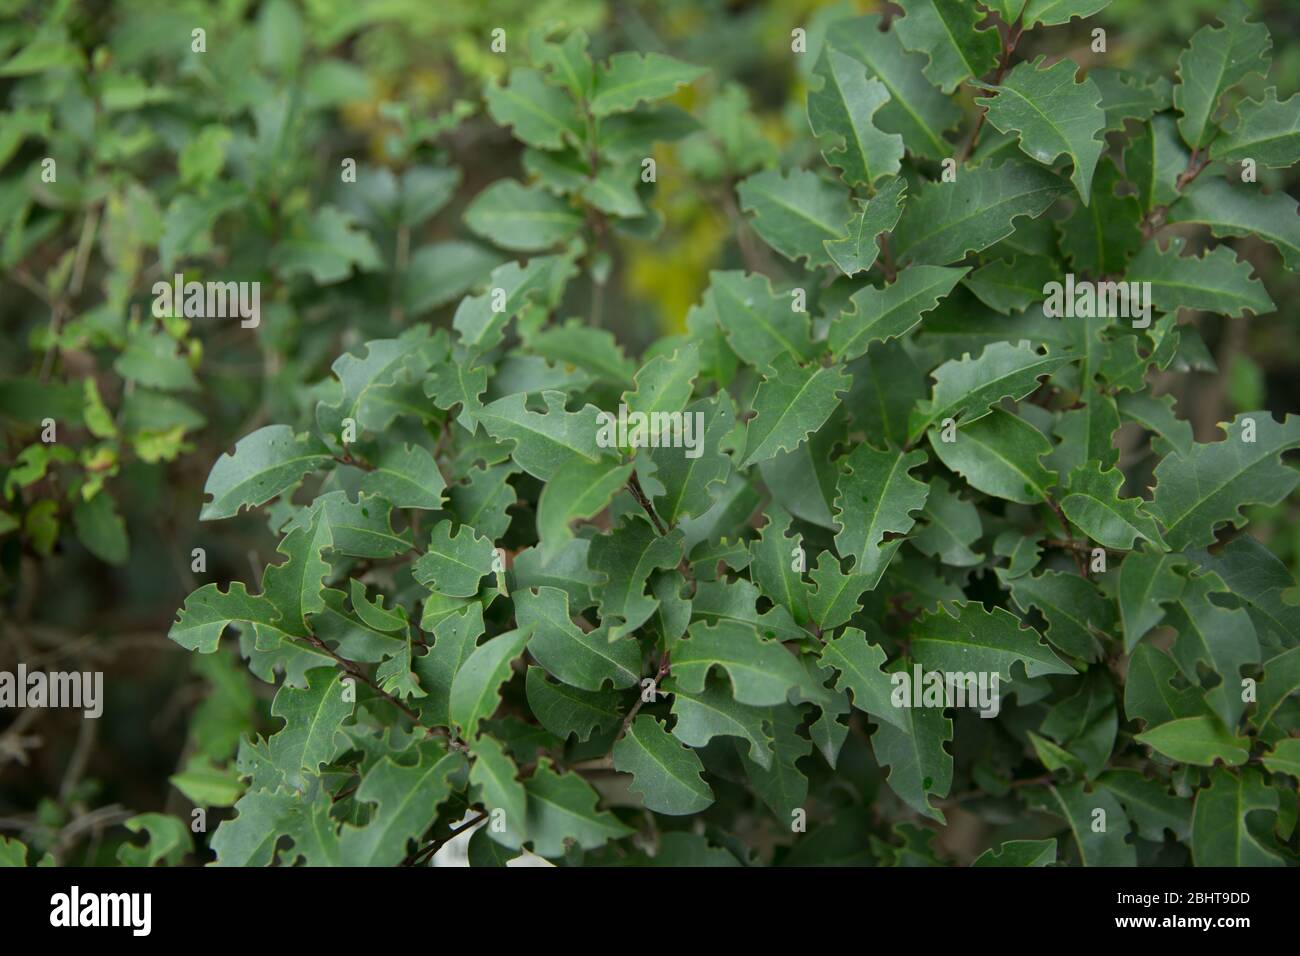 Ligustrum lucidum . Ligustrum lucidum is often used as an ornamental tree, sometimes in variegated forms. Wax leaf ligustrum green shrub . Stock Photo